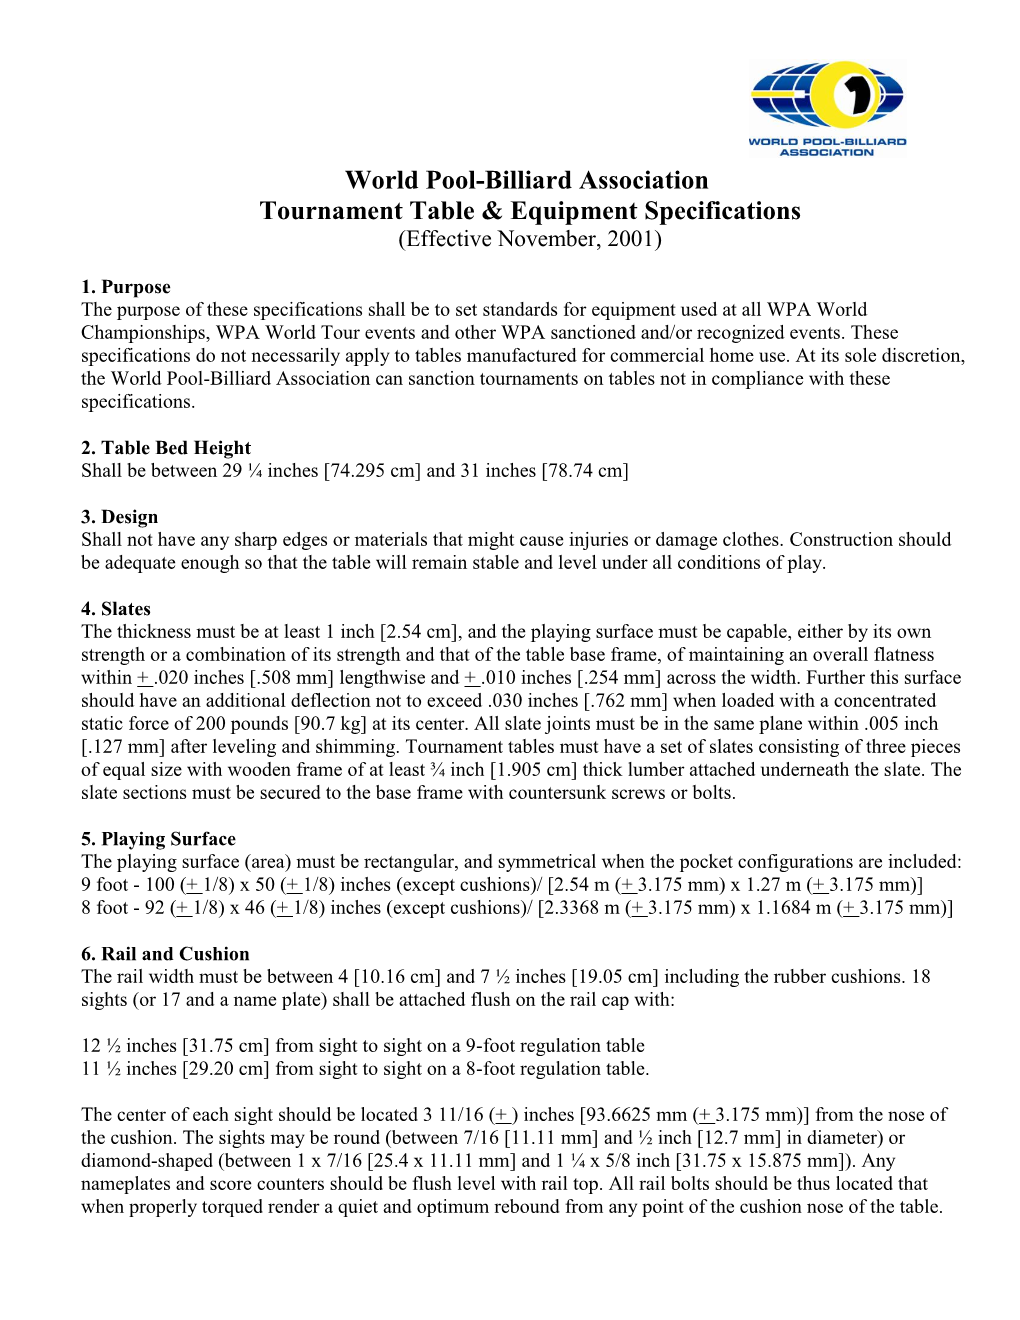 World Pool-Billiard Association Tournament Table & Equipment Specifications